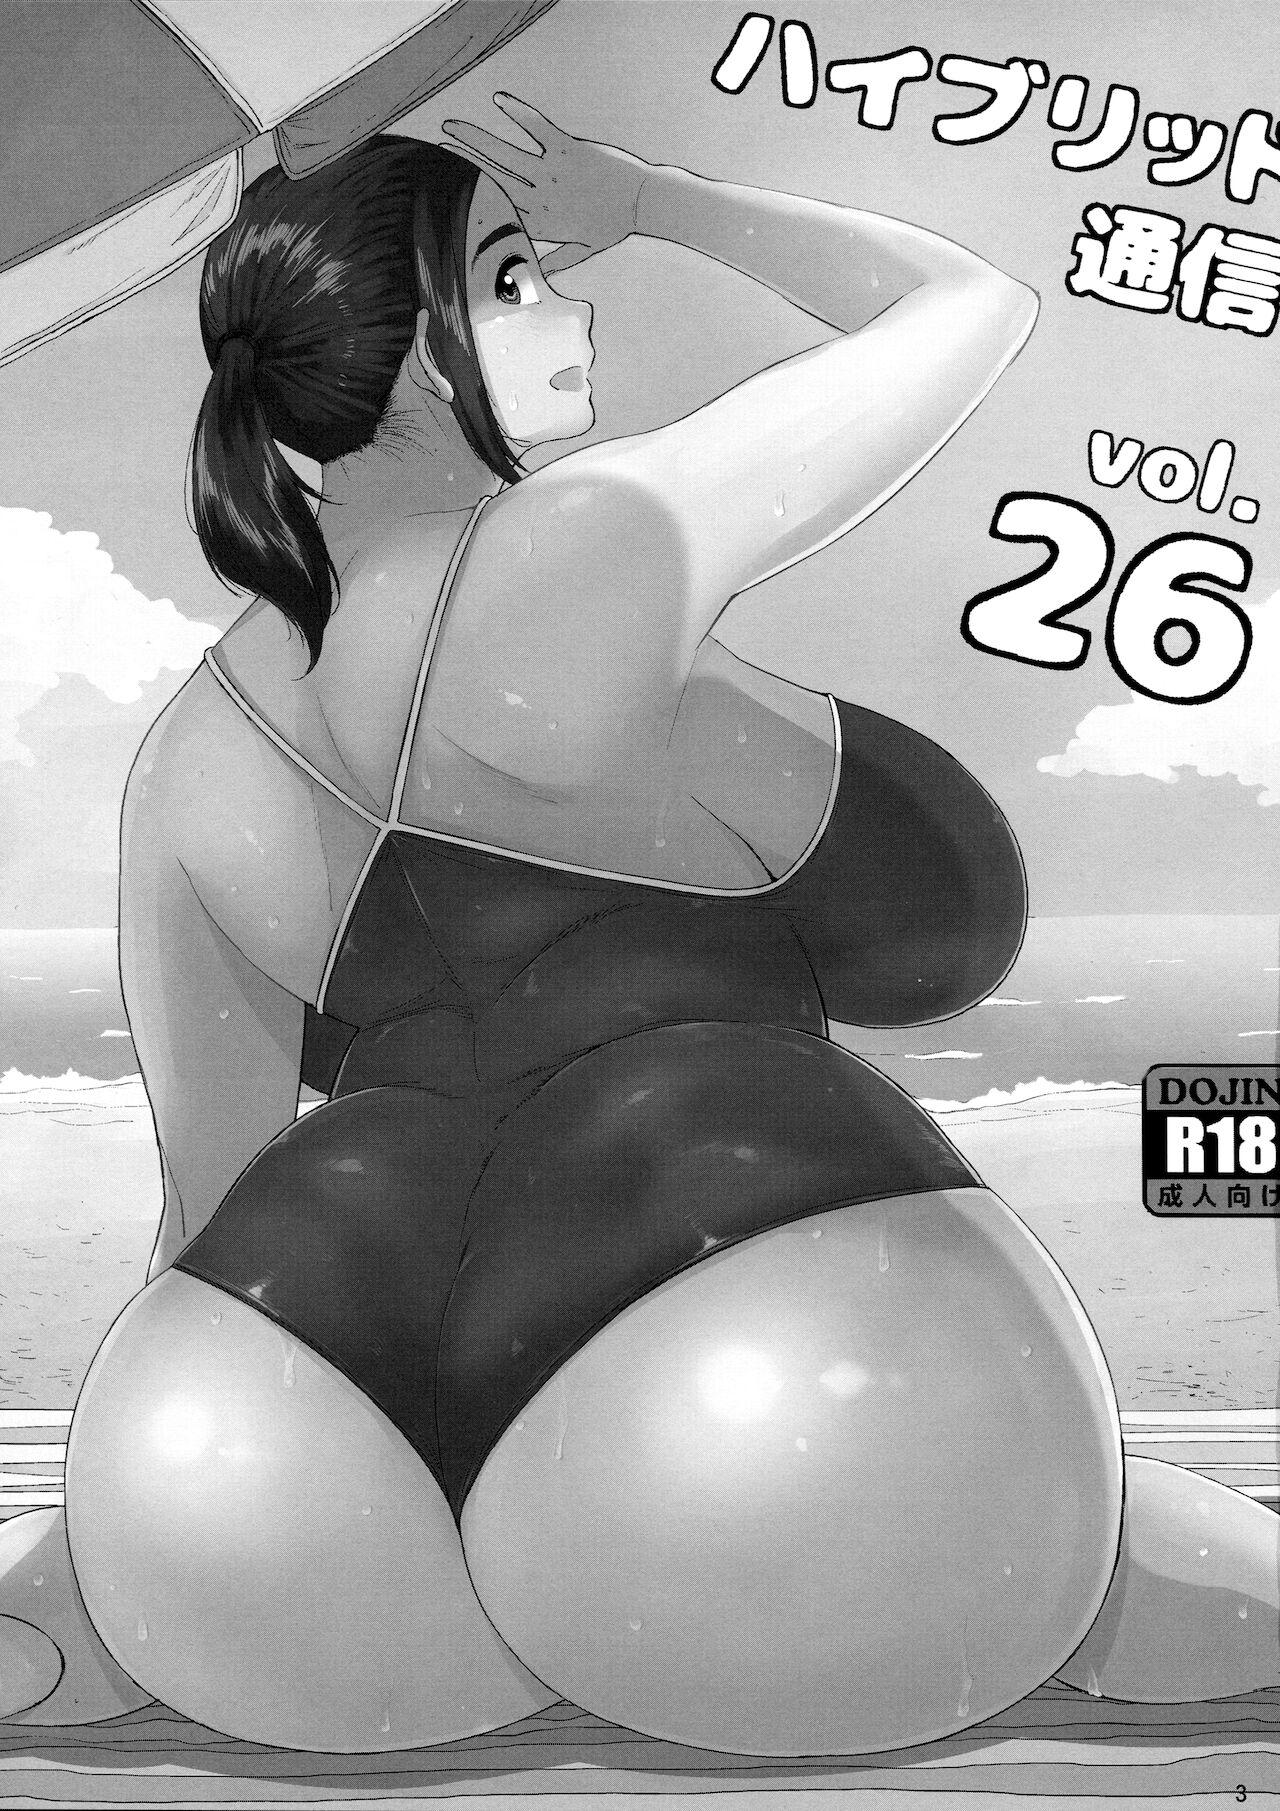 Making Love Porn Hybrid Tsuushin Vol. 26 - Neko no otera no chion san Mujer - Picture 2